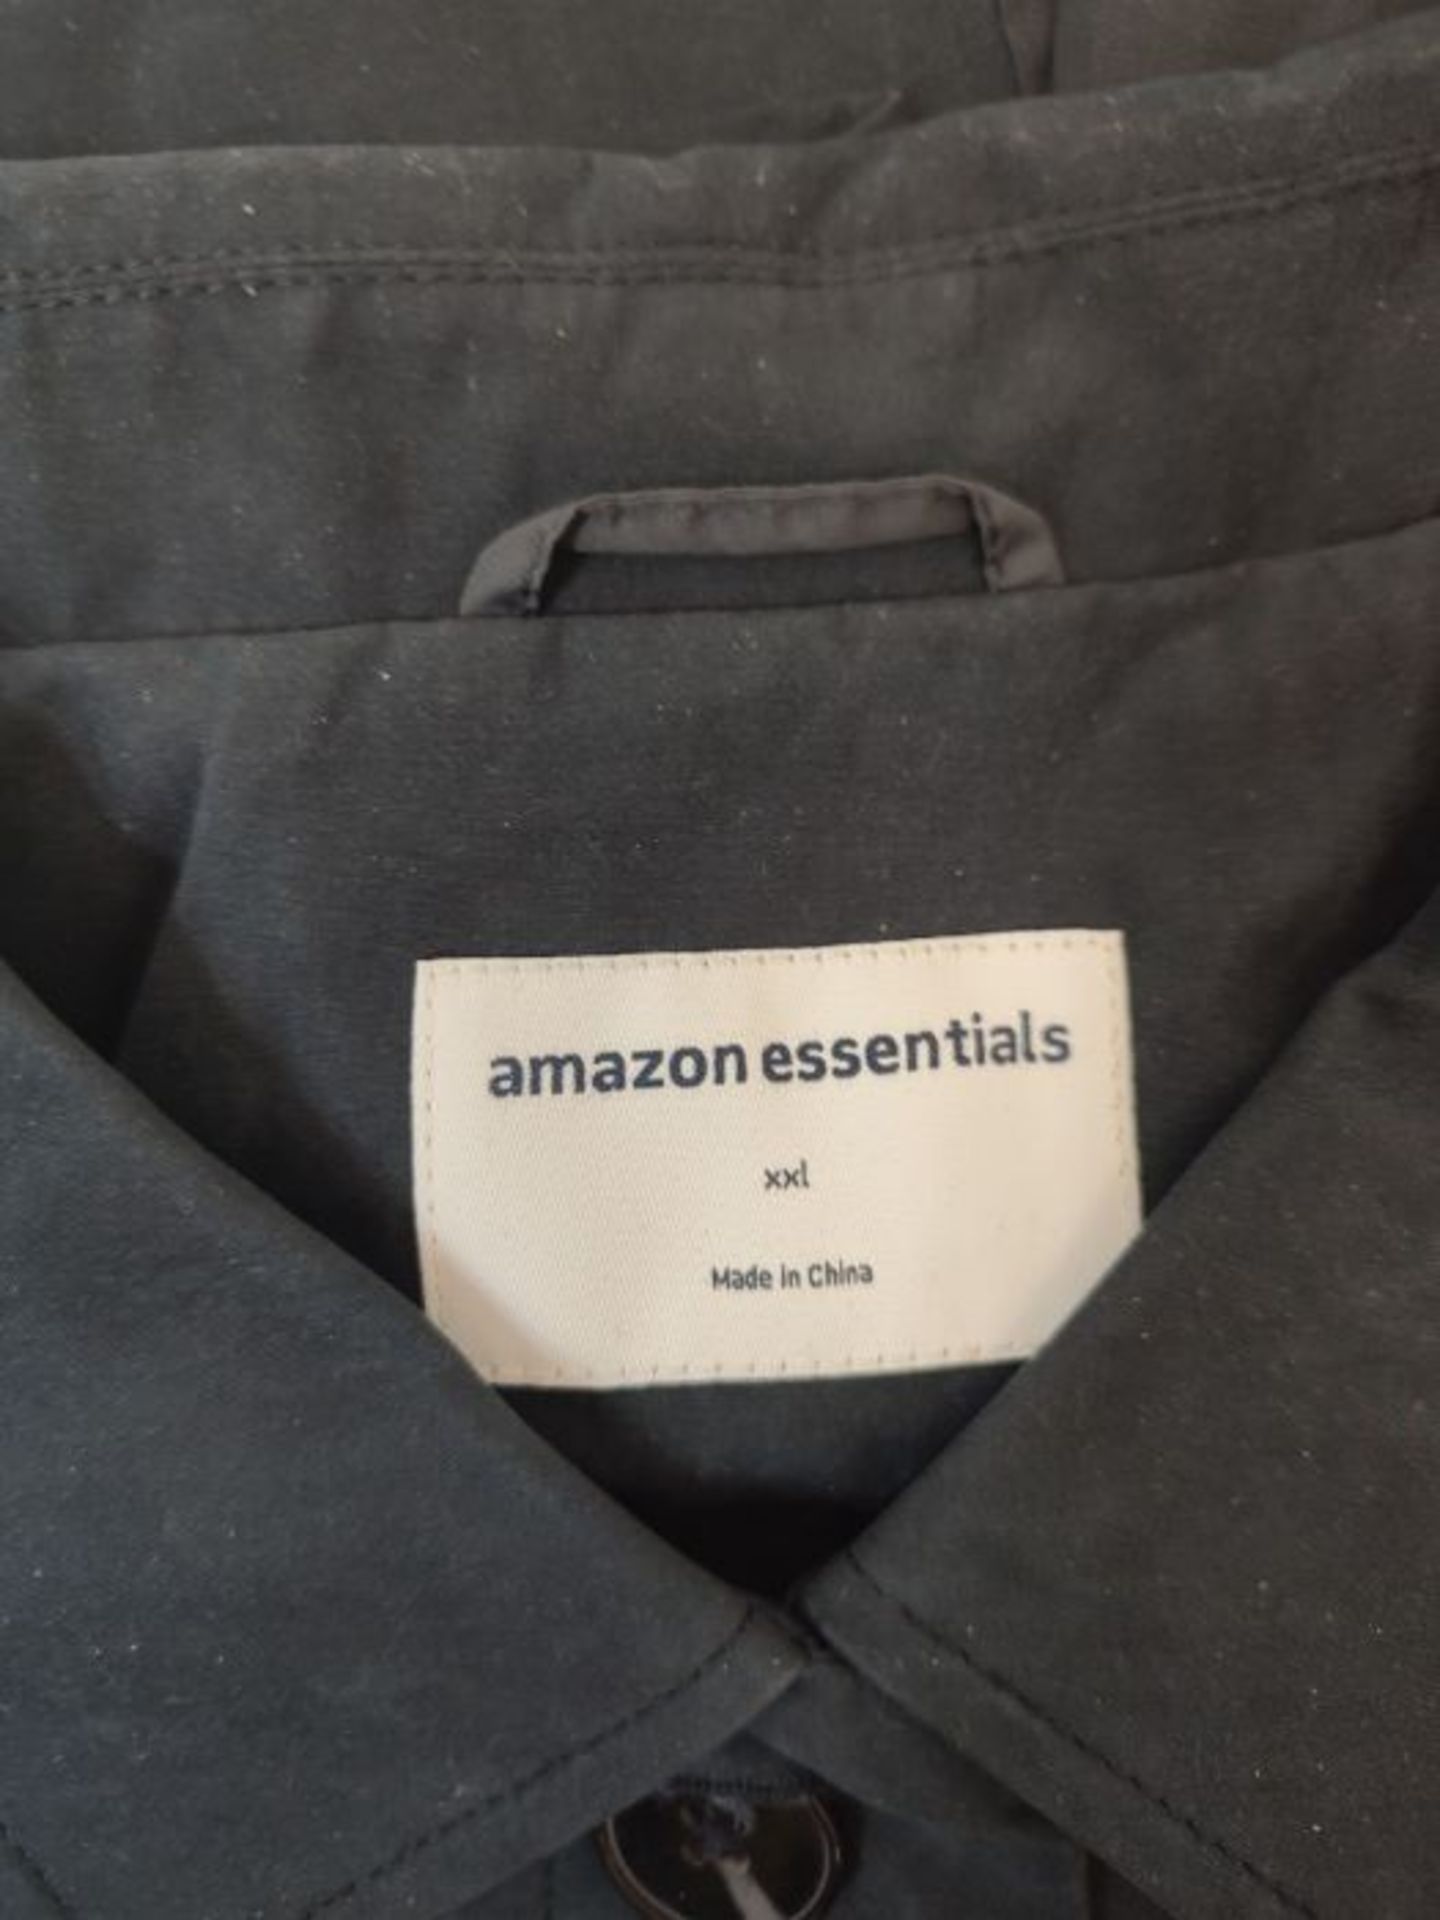 Amazon Essentials Water-resistant Trench Coat Jacket, Slate Black, XXL - Image 3 of 3